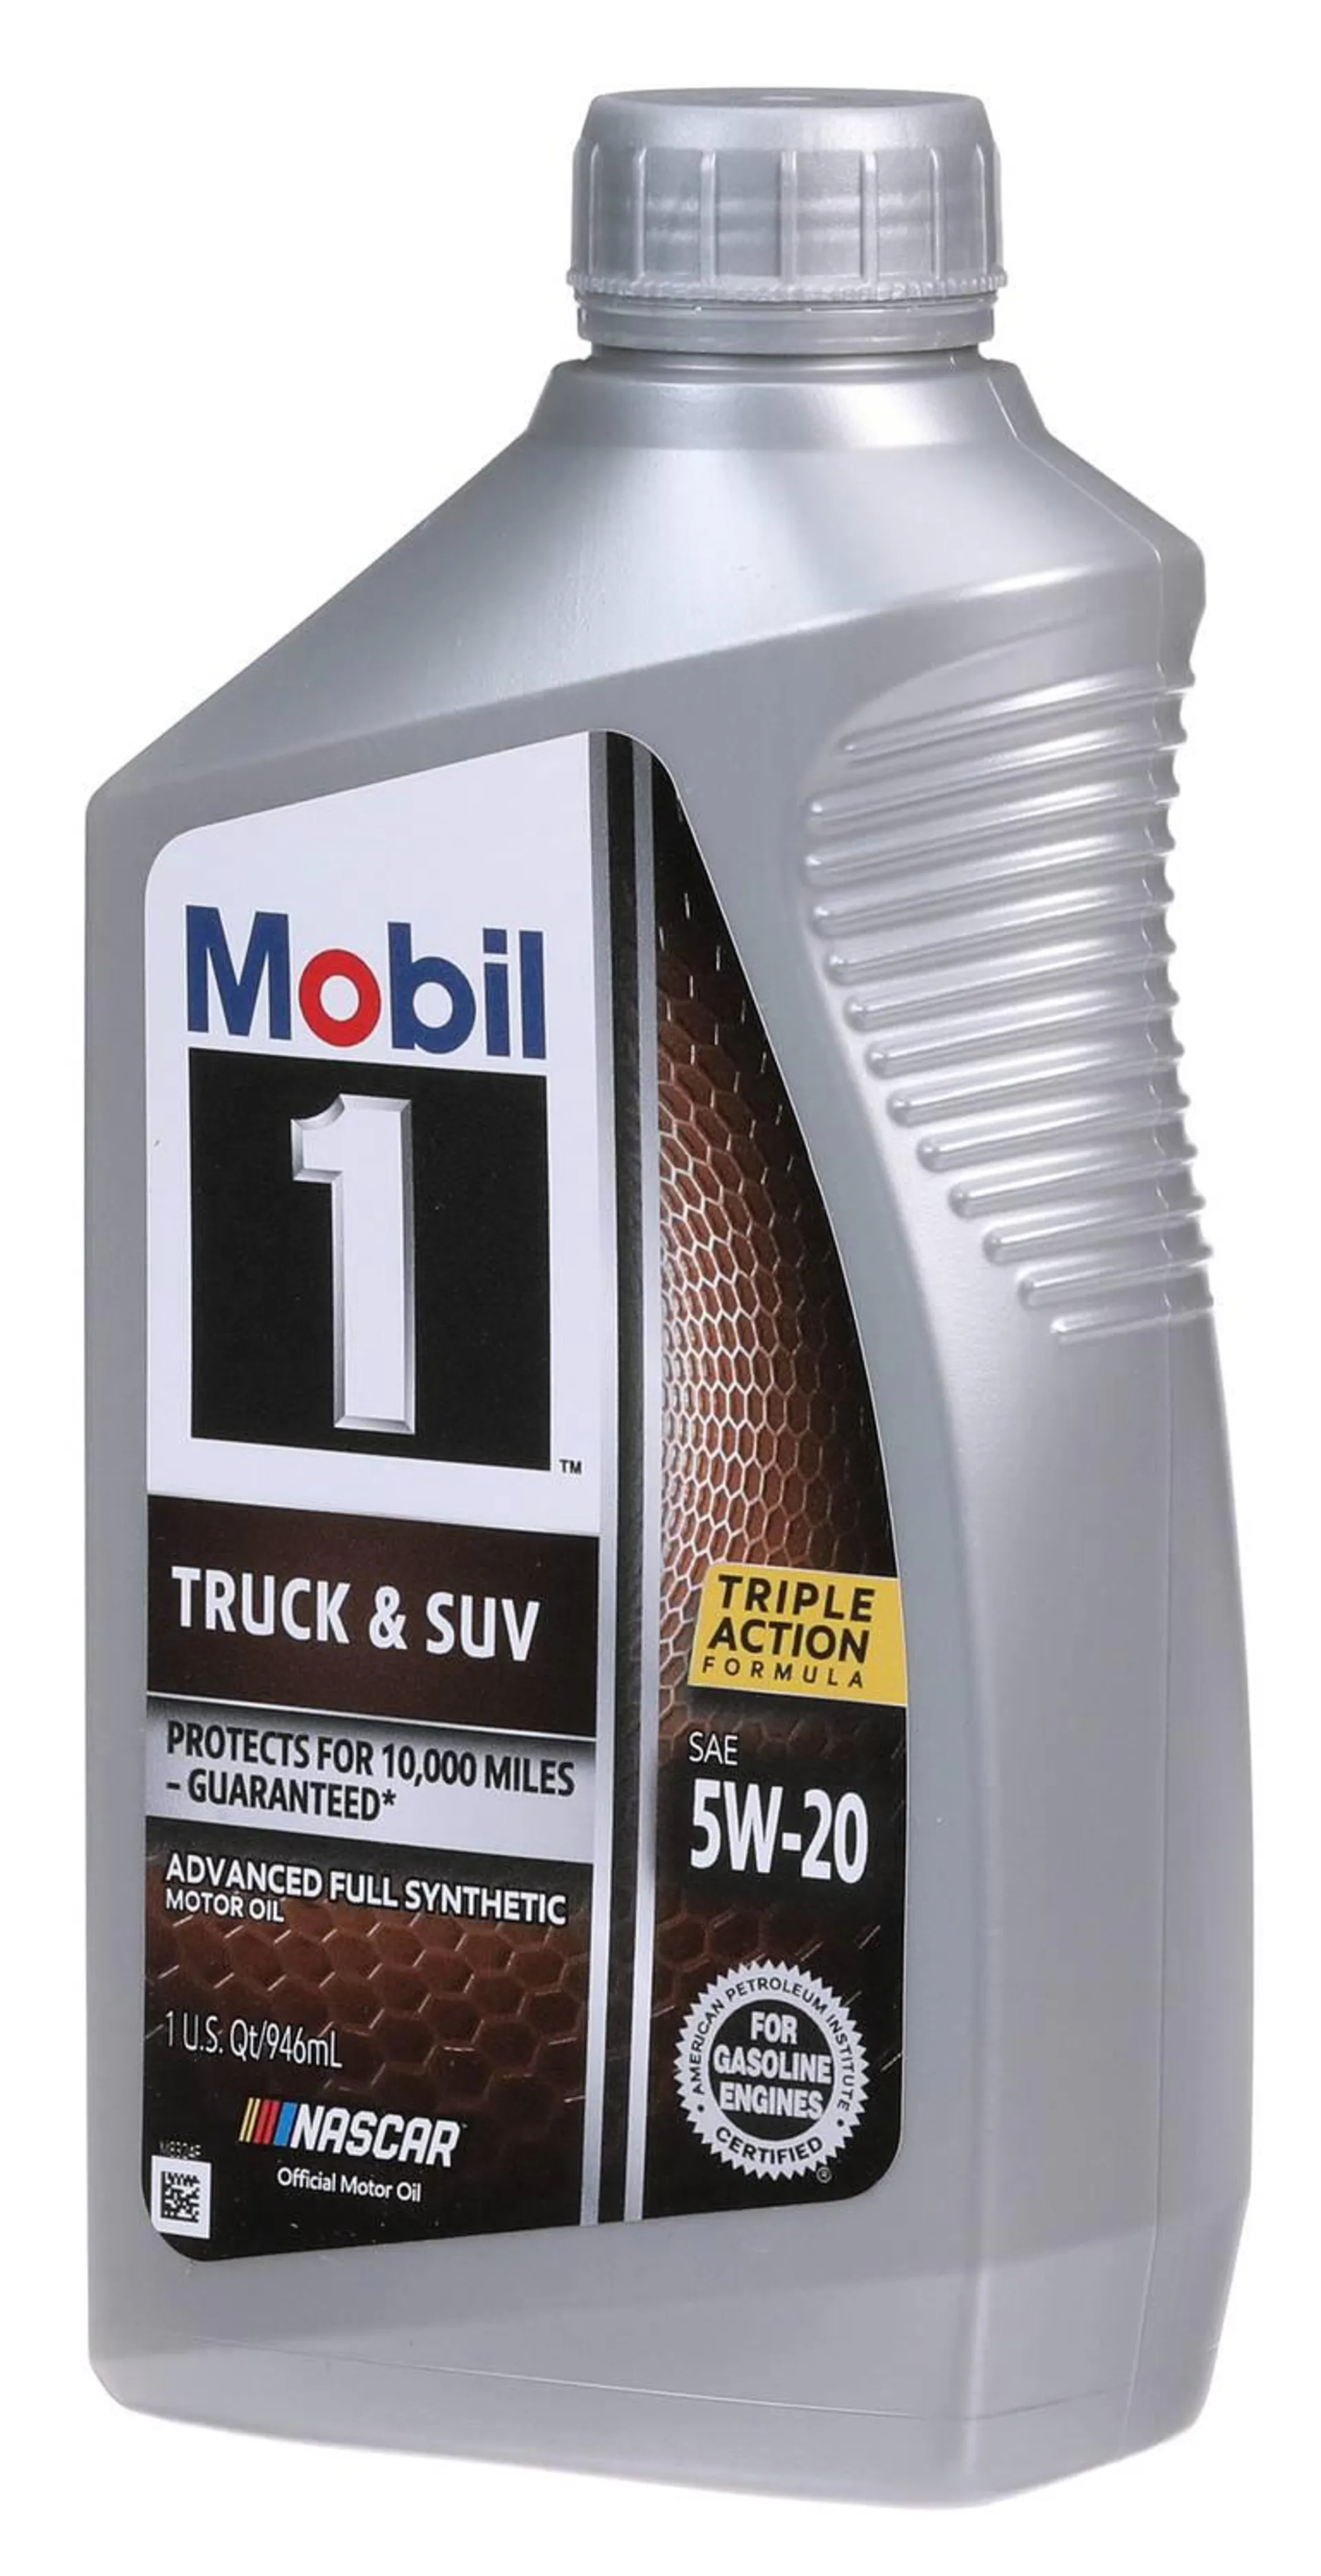 Mobil 1 Truck & SUV Full Synthetic Motor Oil 5W-20 1 Quart - 1-5-20SUV